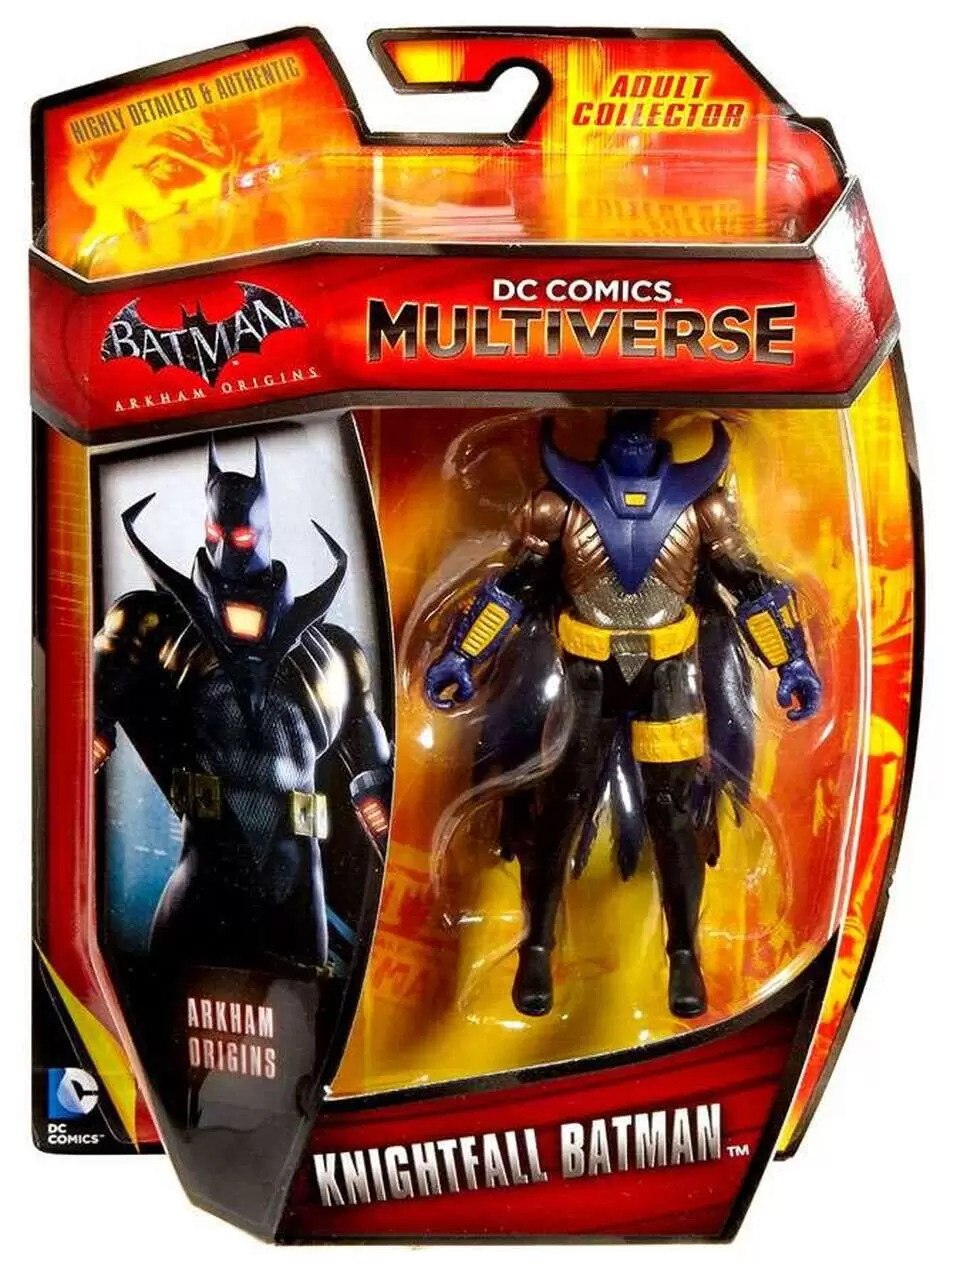 DC Comics Multiverse (Mattel) - Knightfall Batman